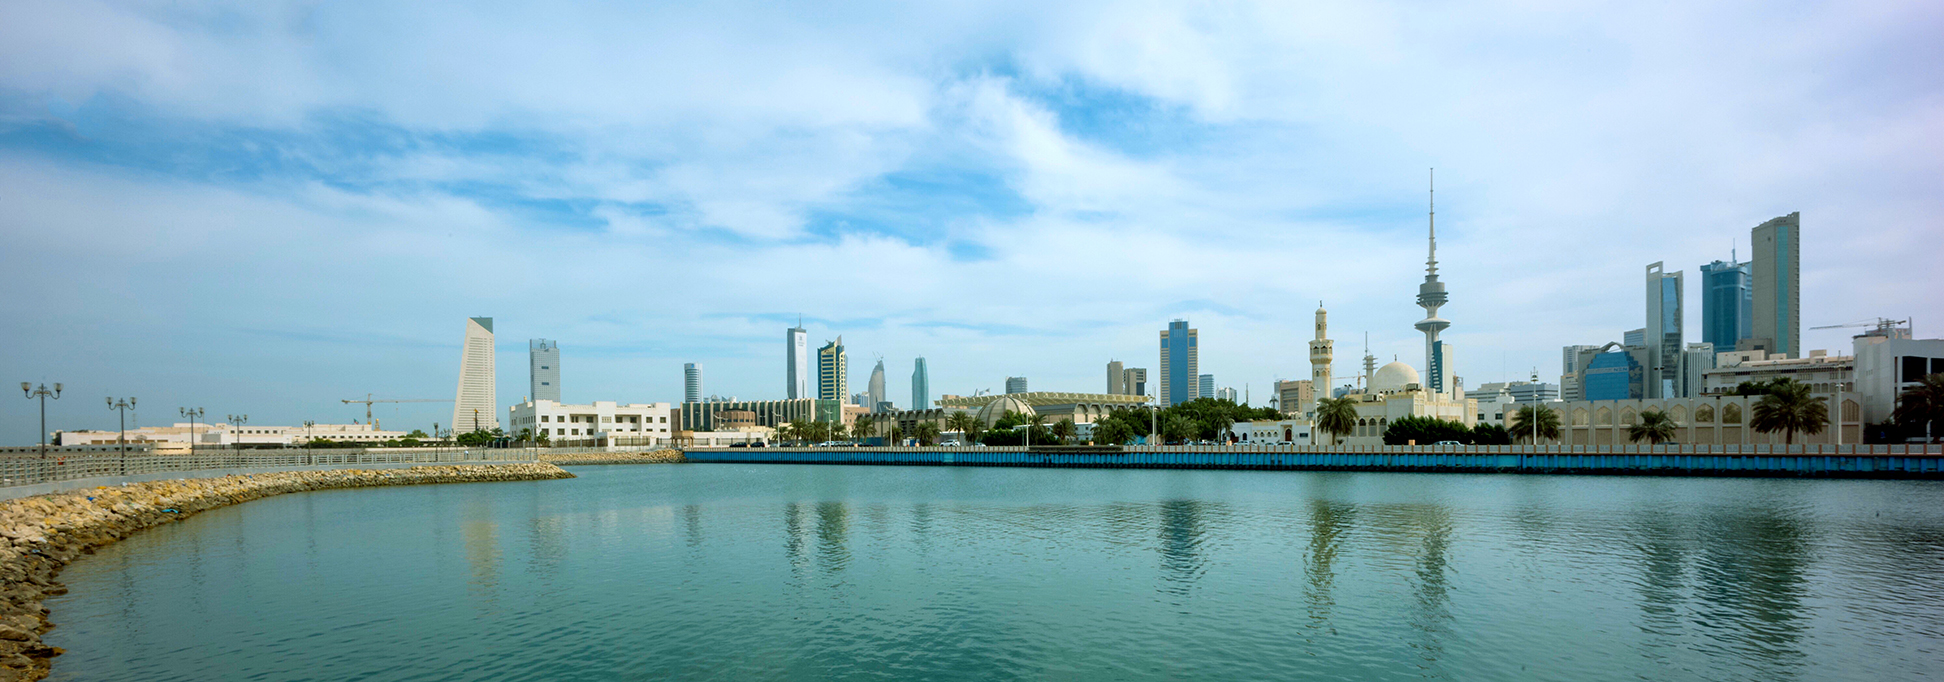 Kuwait City skyline at waterfront